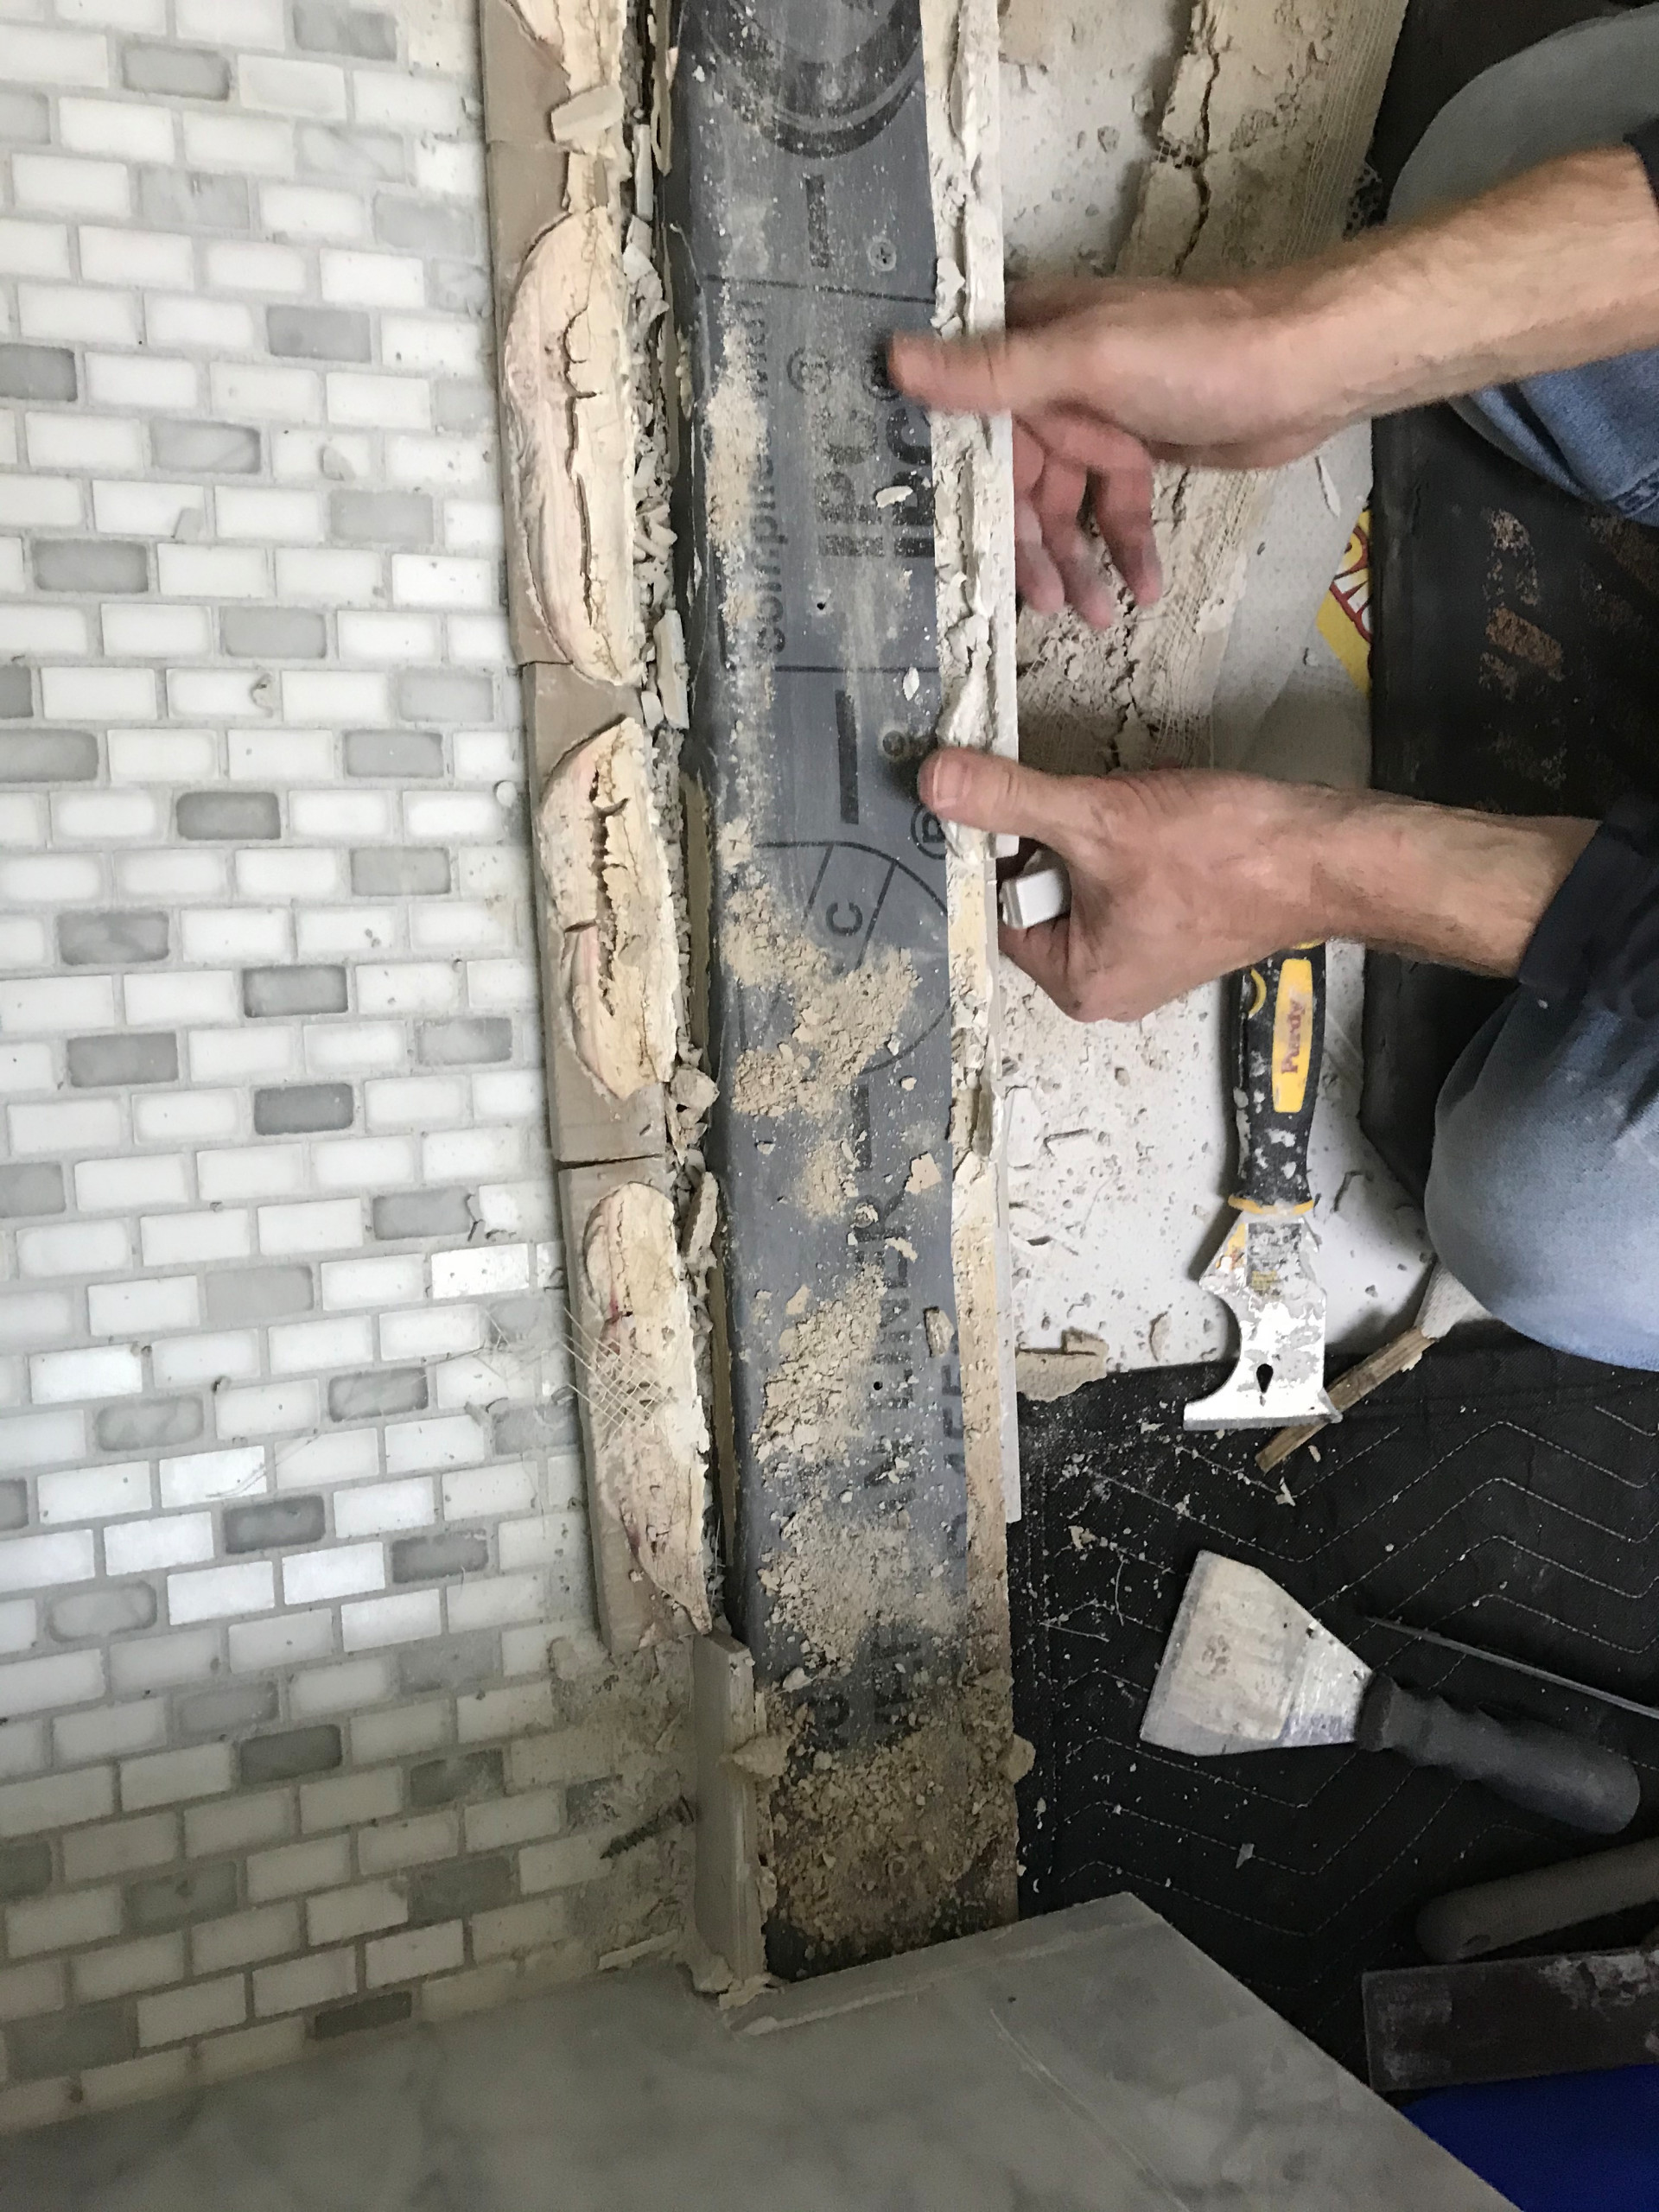 Severna Park Shower Leak and Tile Floor Repair Project